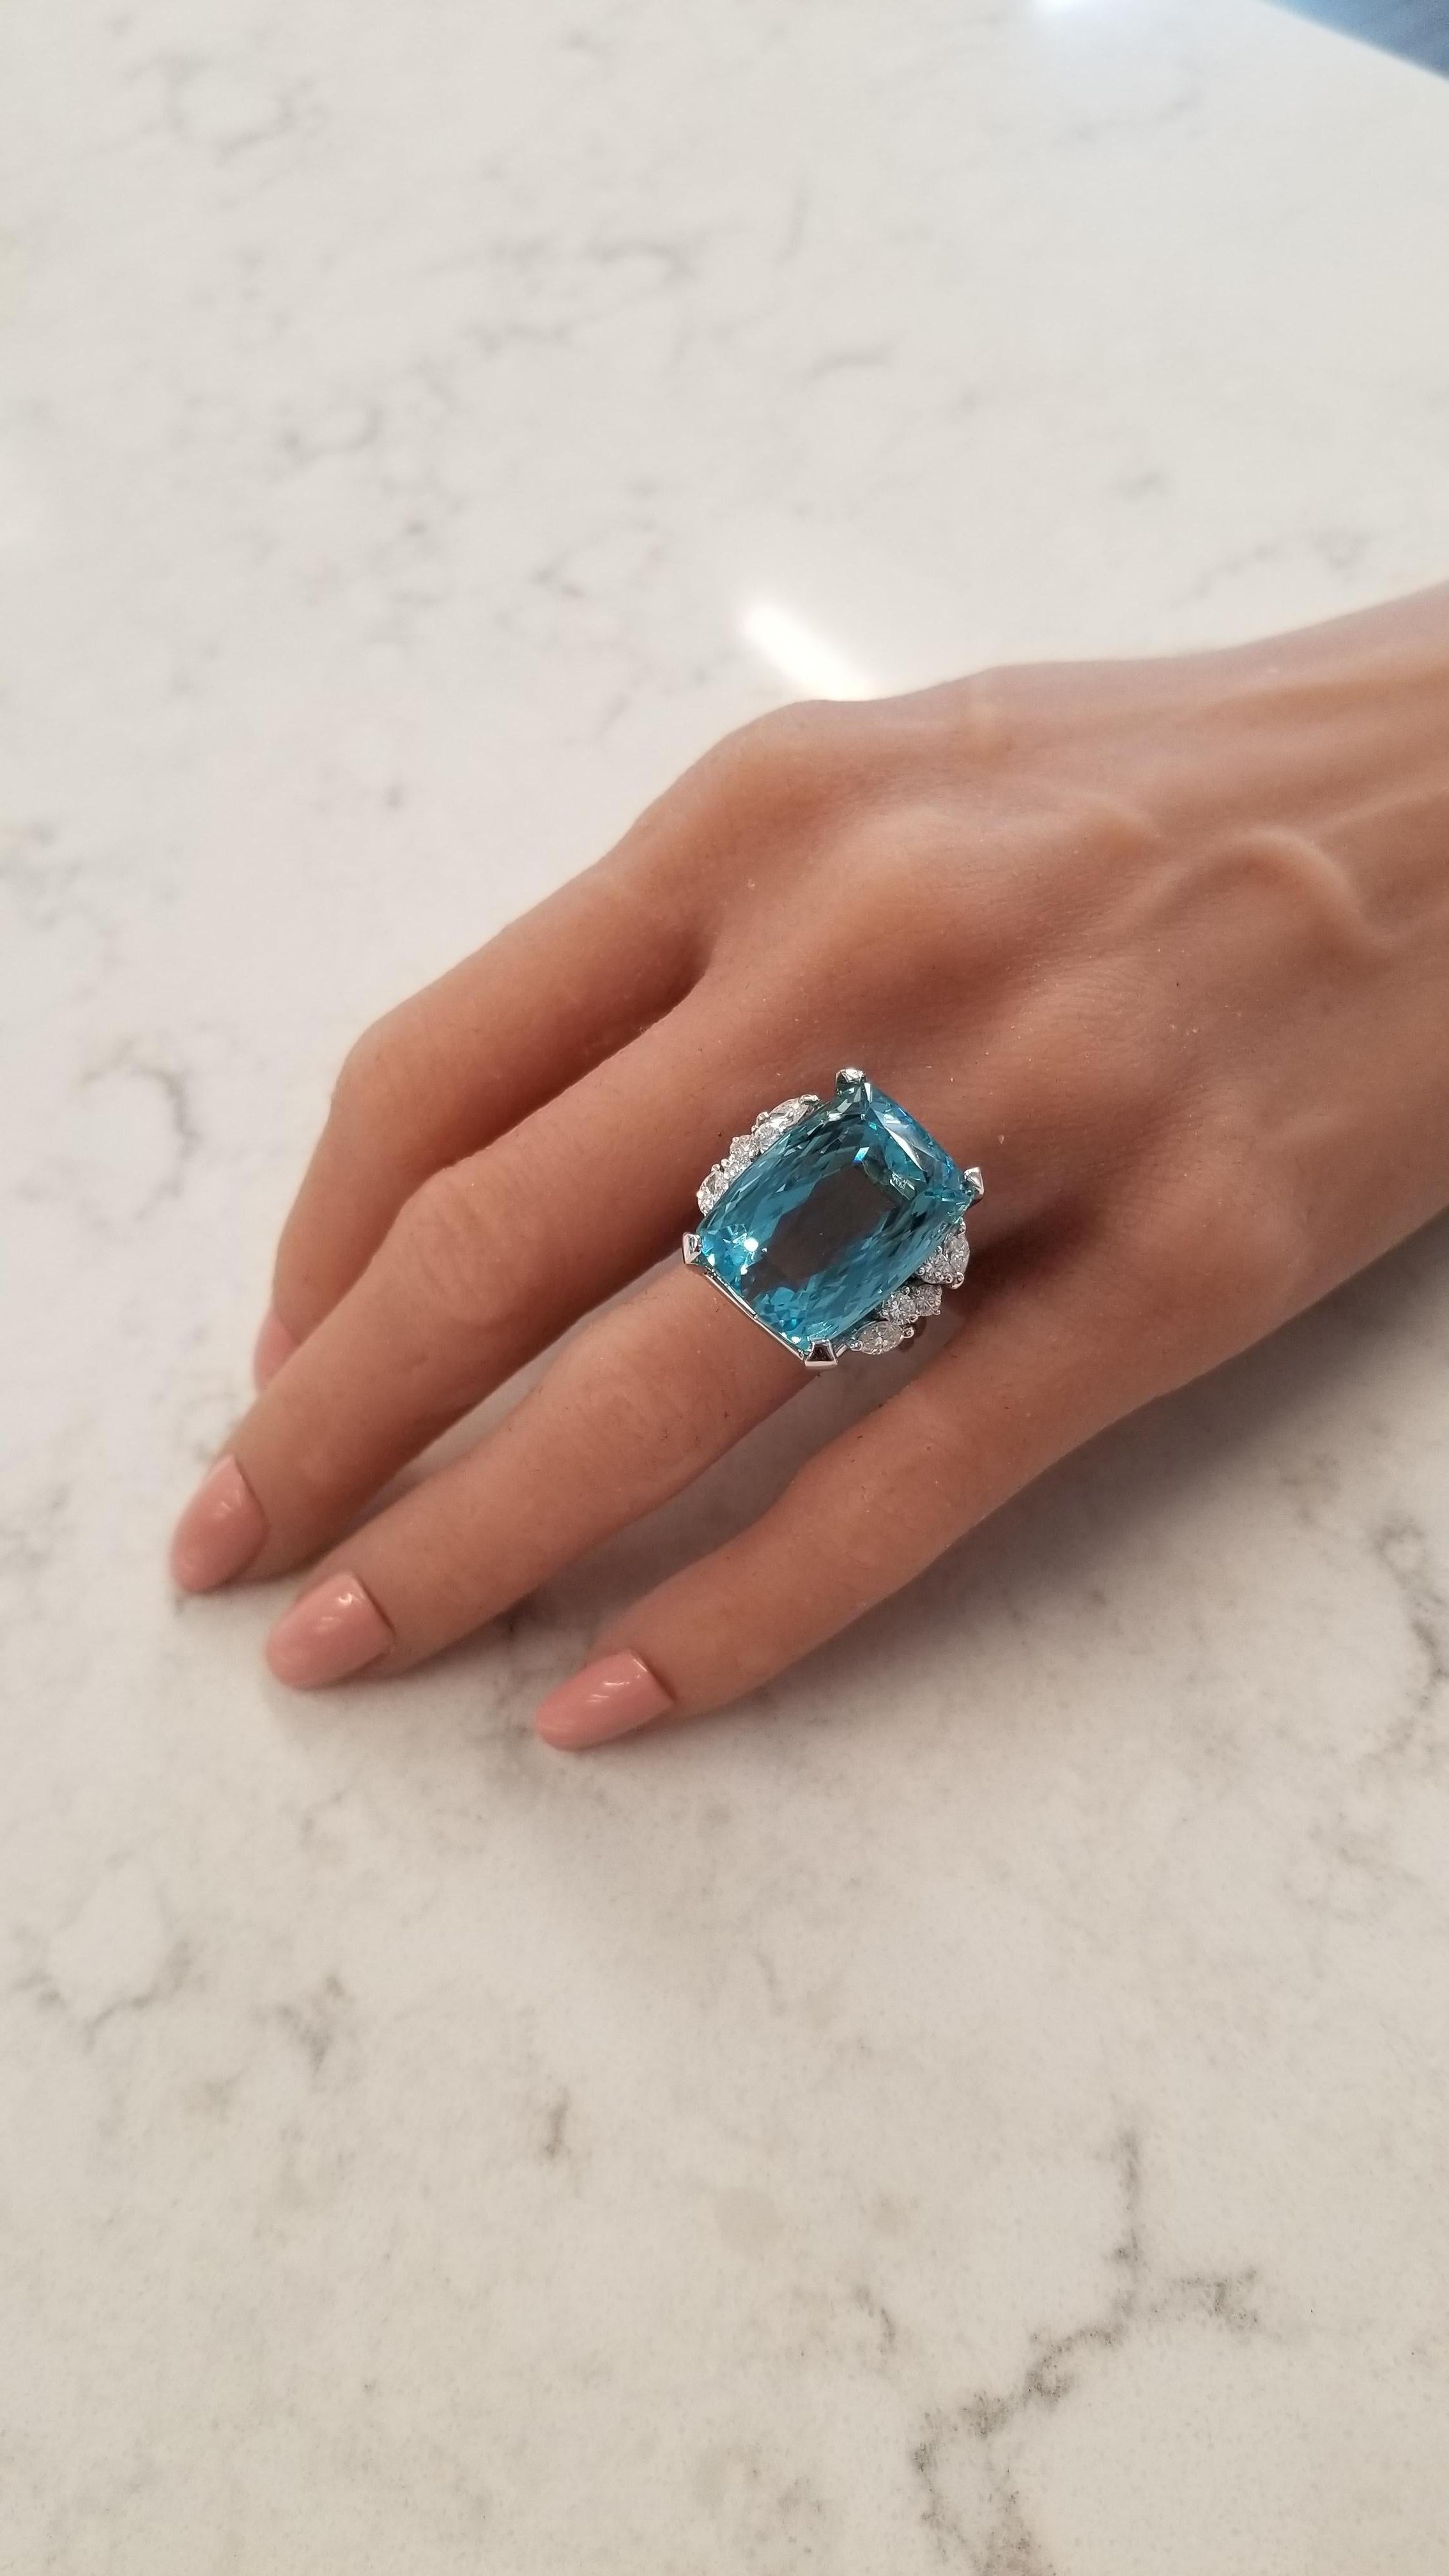 30.63 Carat Emerald Cut Aquamarine And Diamond Cocktail Ring In 18K White Gold 3